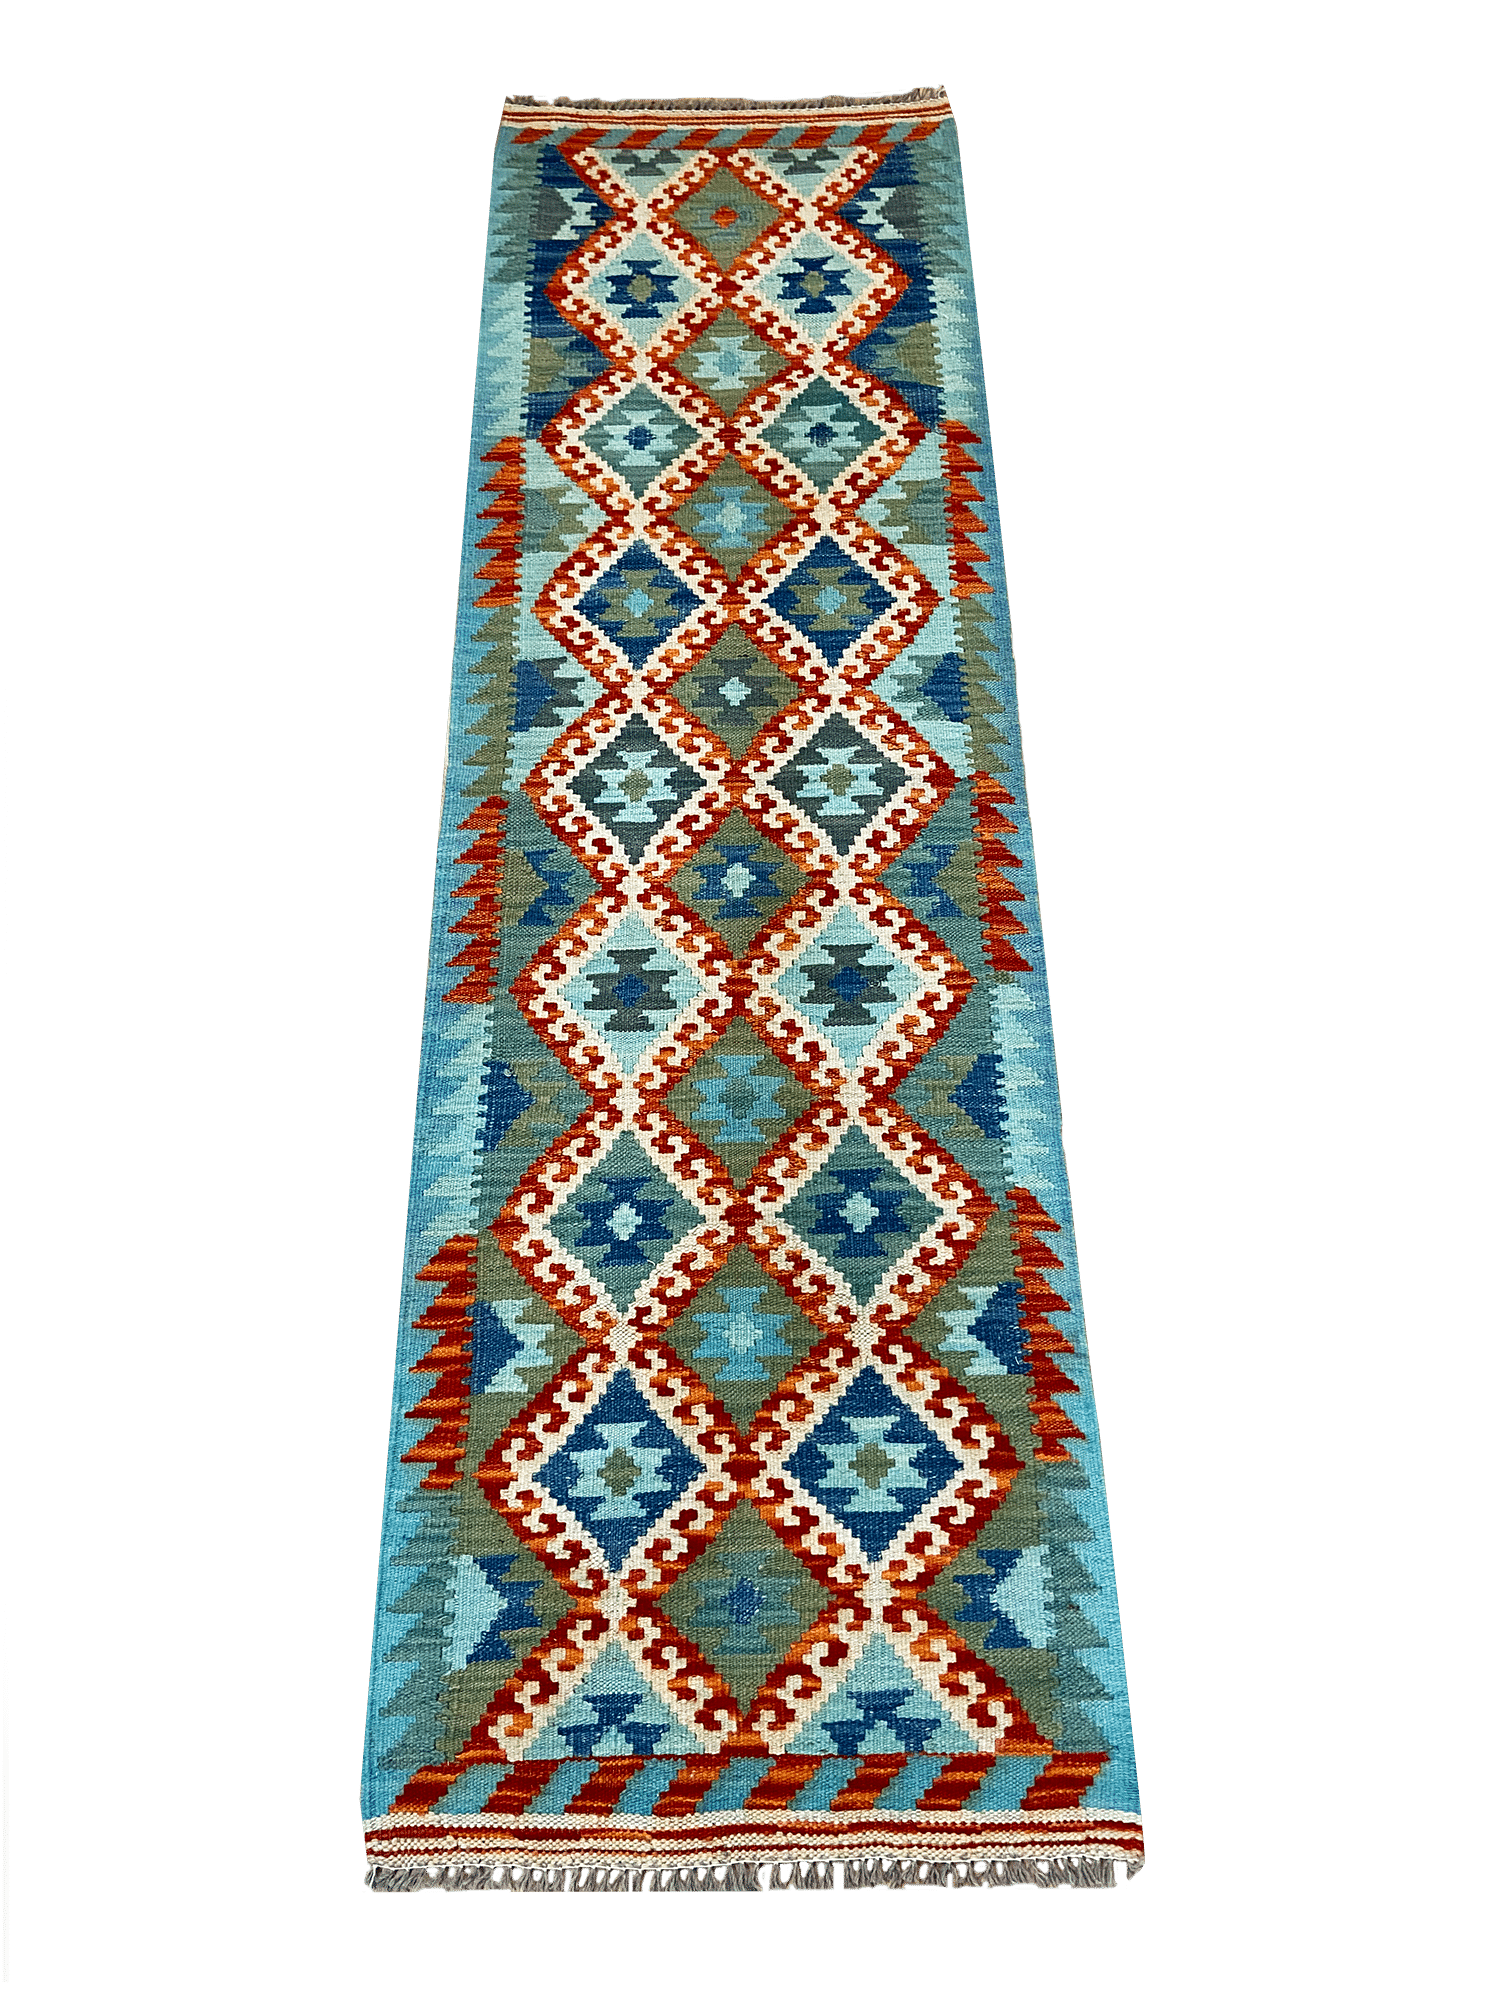 Handmade Colorful Kilim 2' X 6' 7"